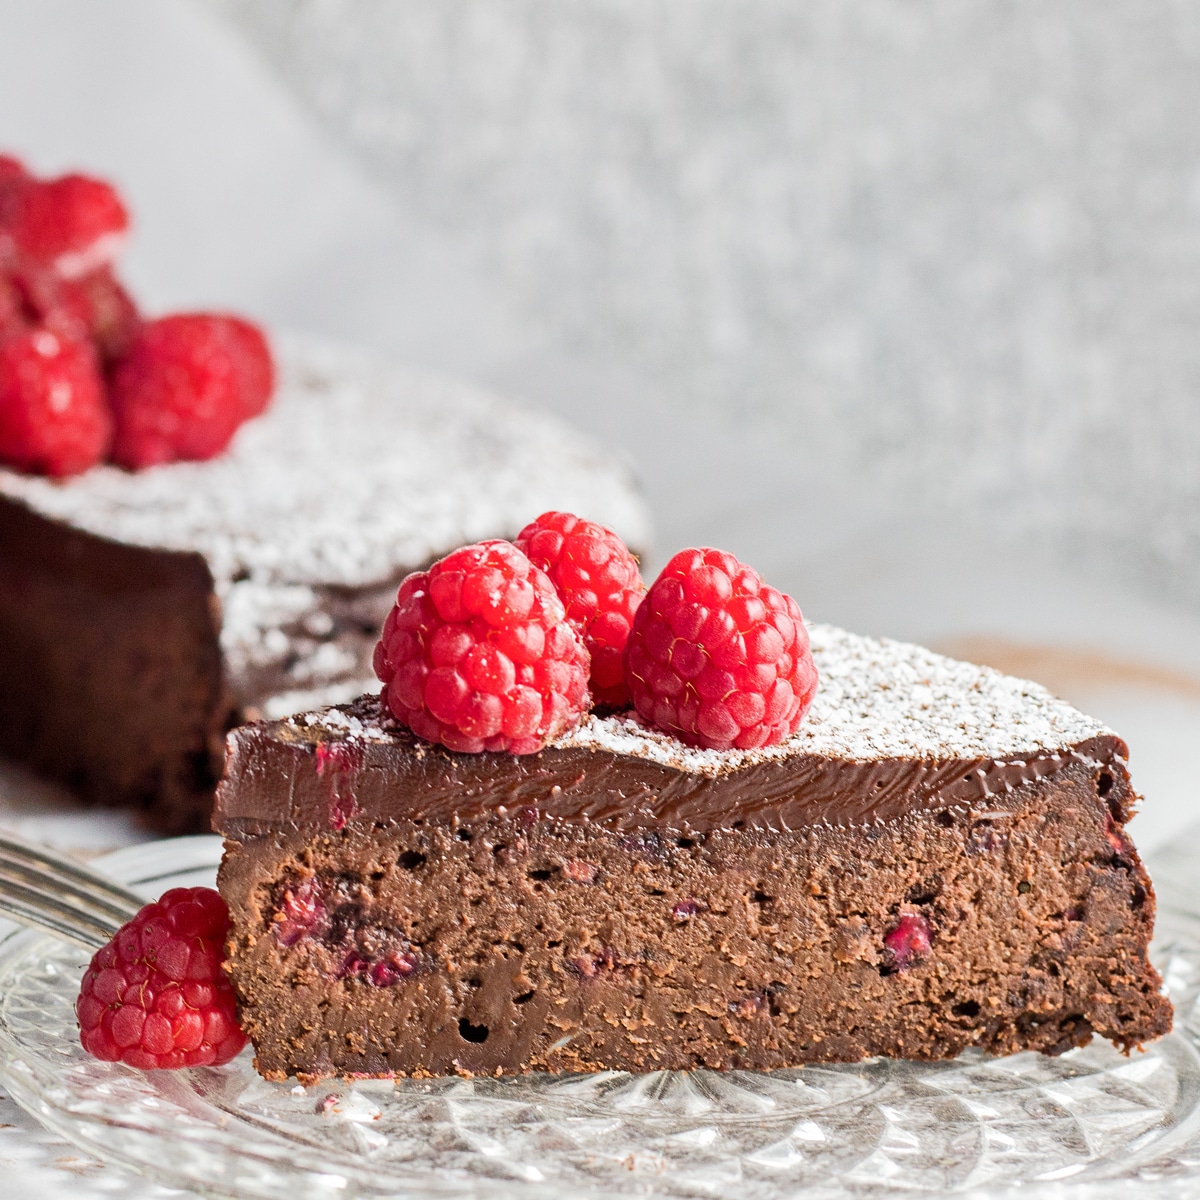 Flourless chocolate raspberry cake sliced with raspberries on top.